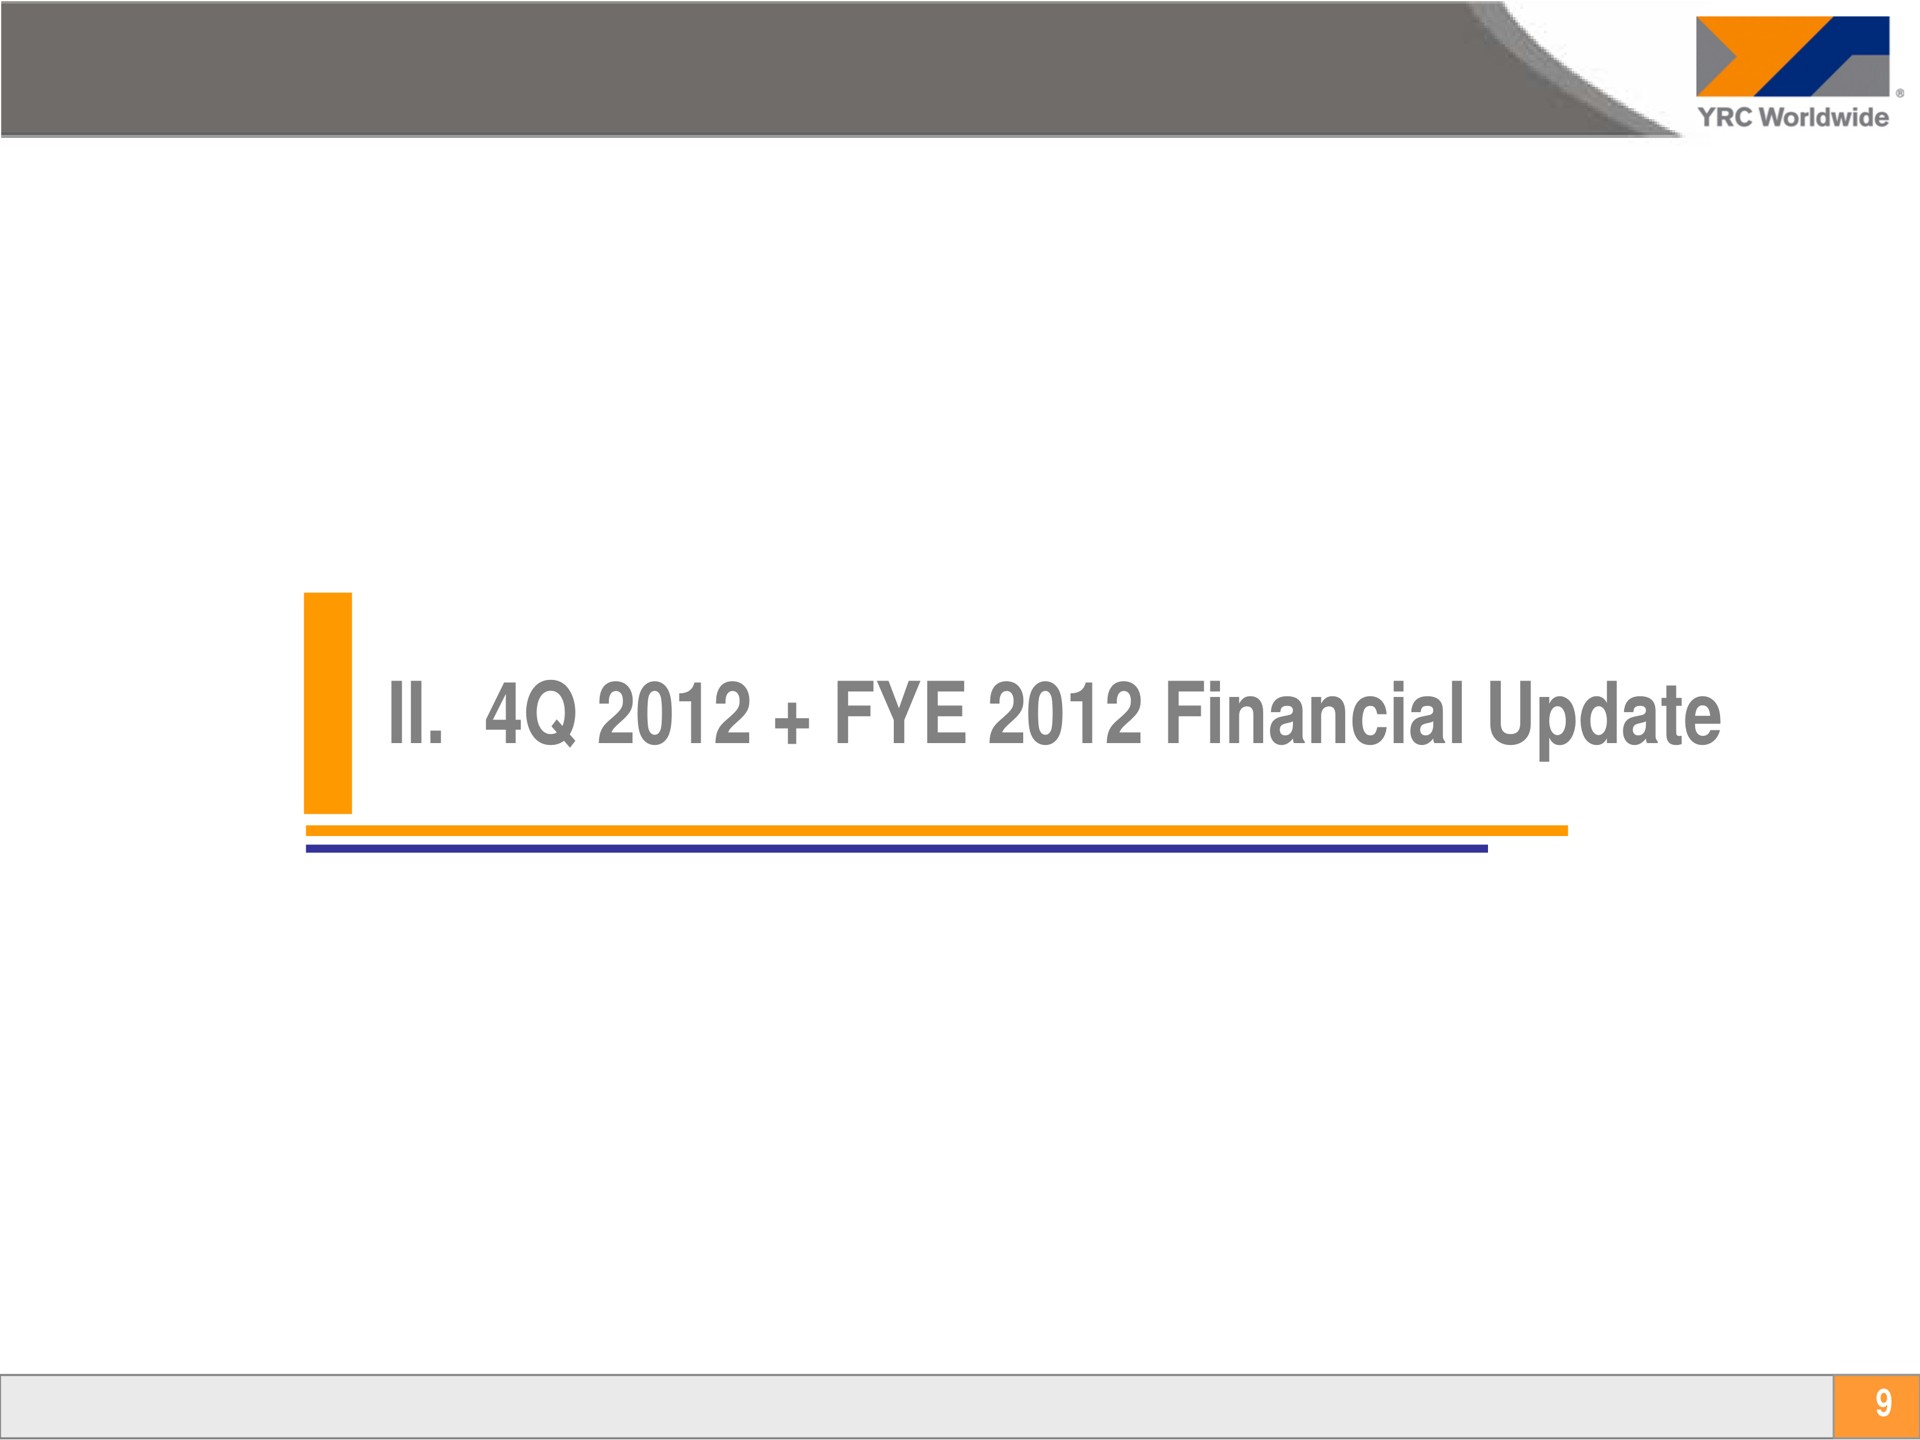 financial update | Yellow Corporation